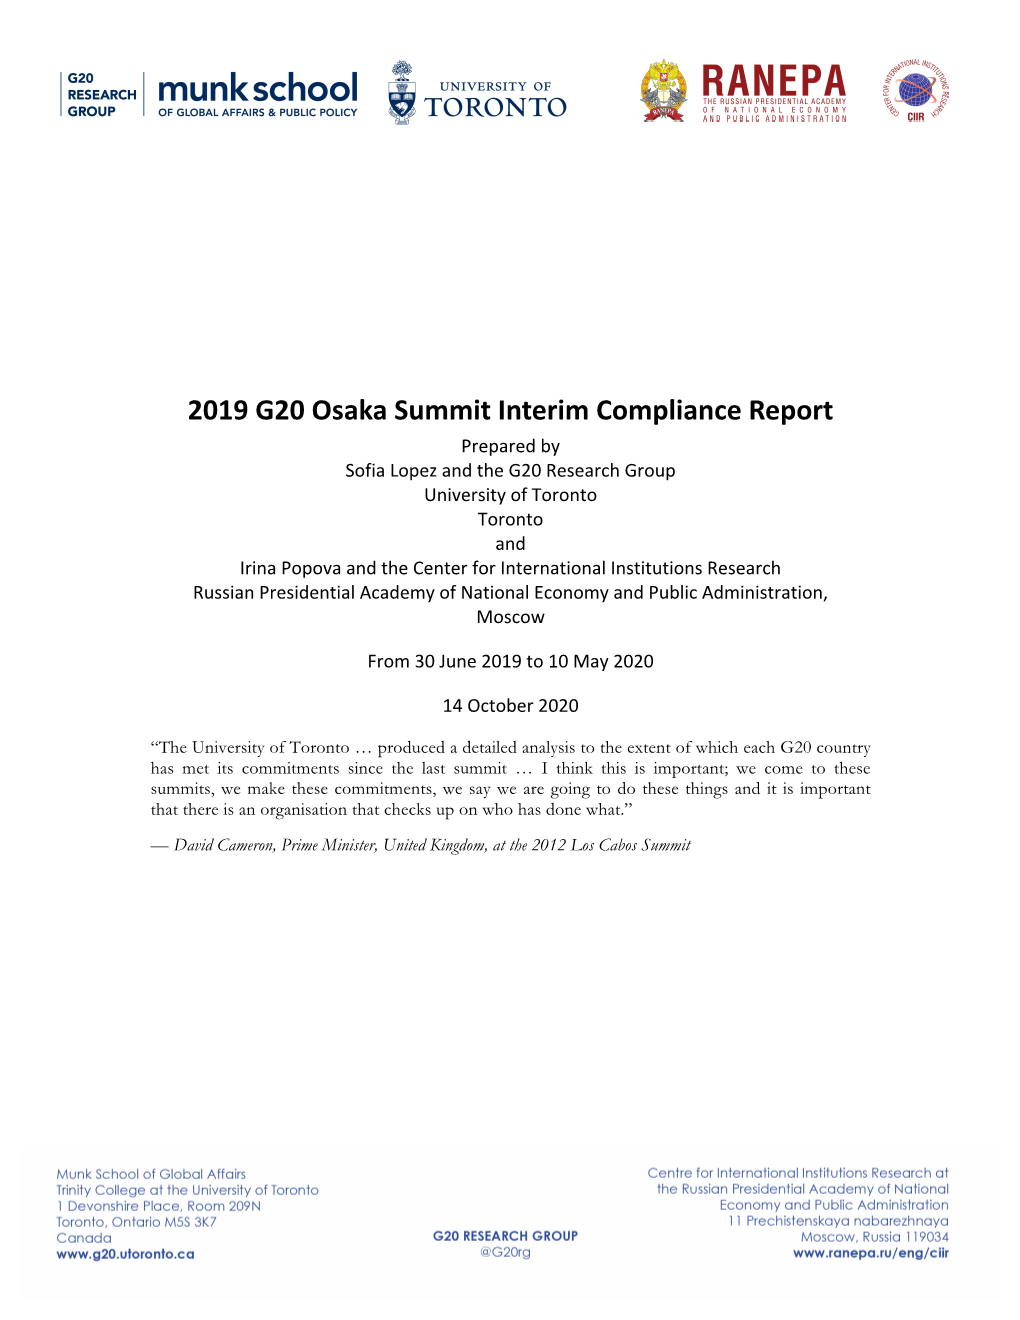 Public Health Preparedness: 2019 G20 Osaka Summit Interim Compliance Report